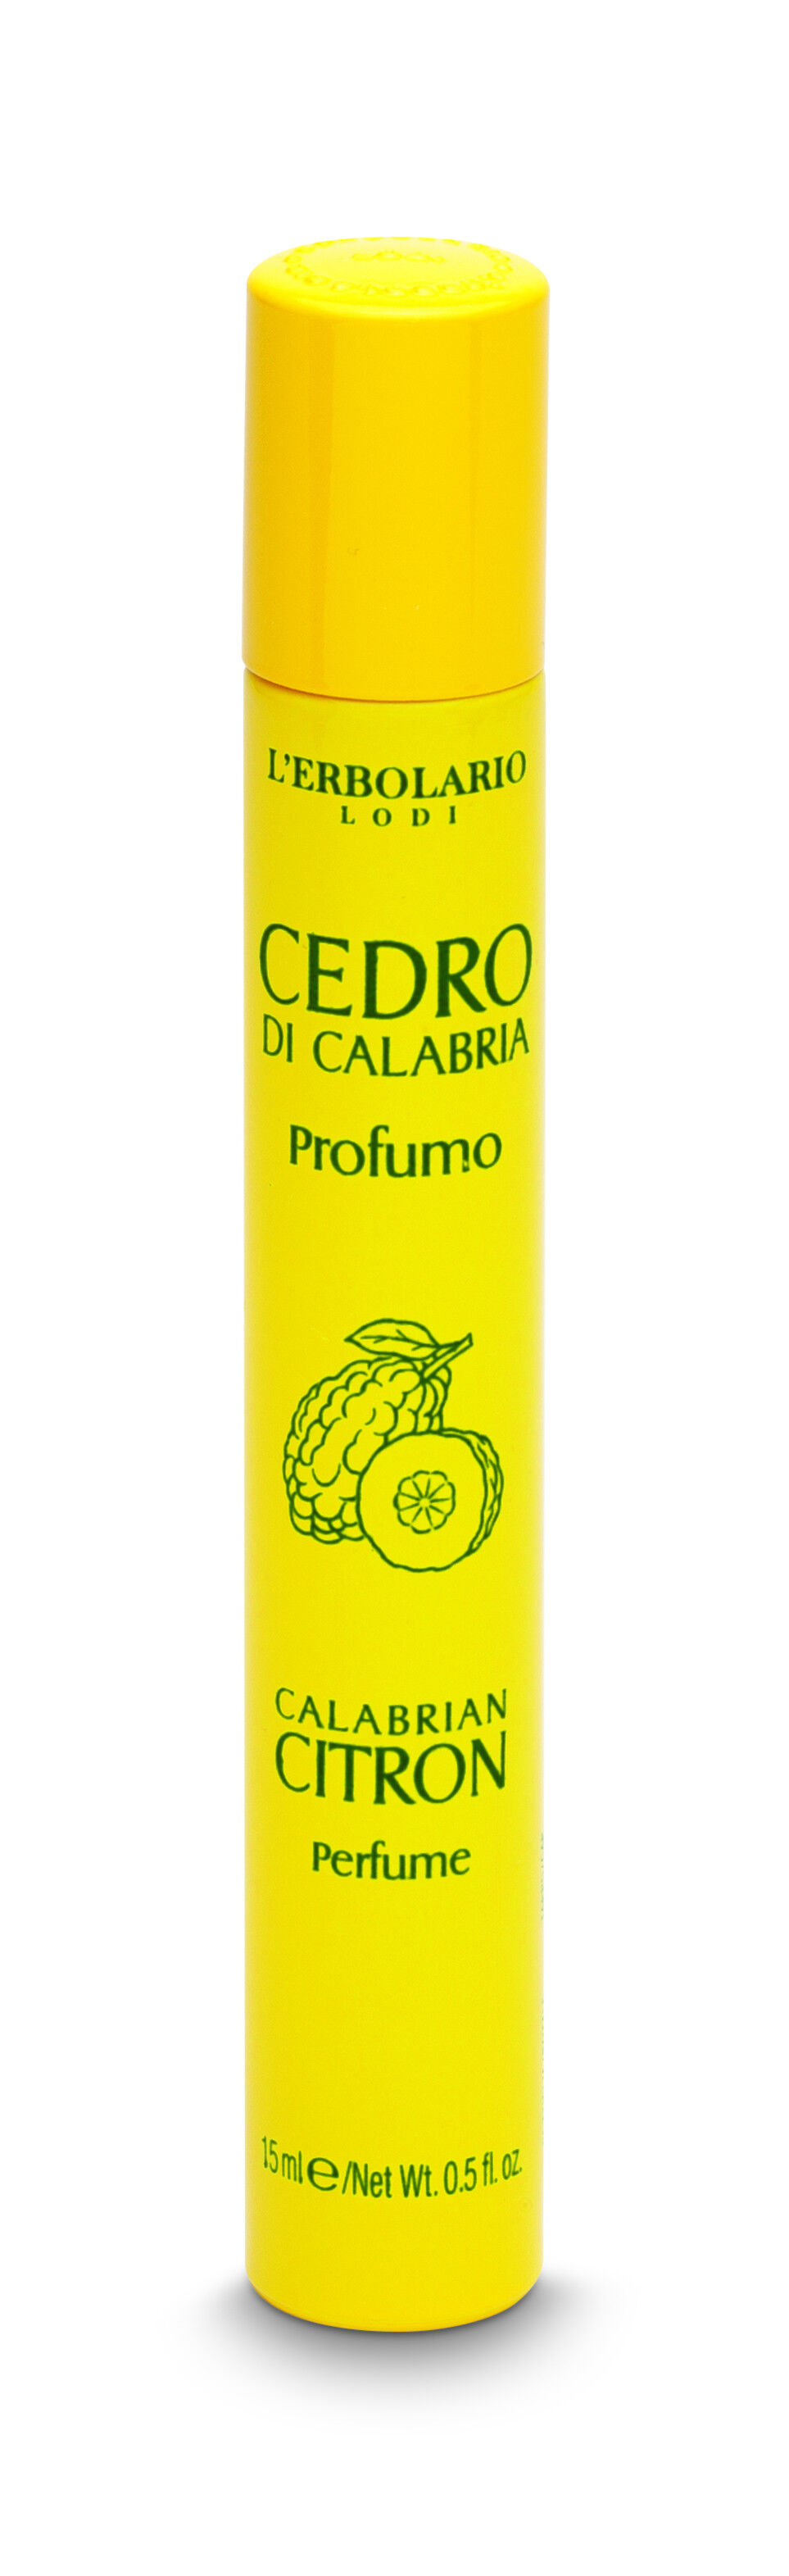 Парфюмированная вода унисекс L'Erbolario Cedro Di Calabria, 15 мл парфюмерная вода лаб фрагранс calabria 15 мл